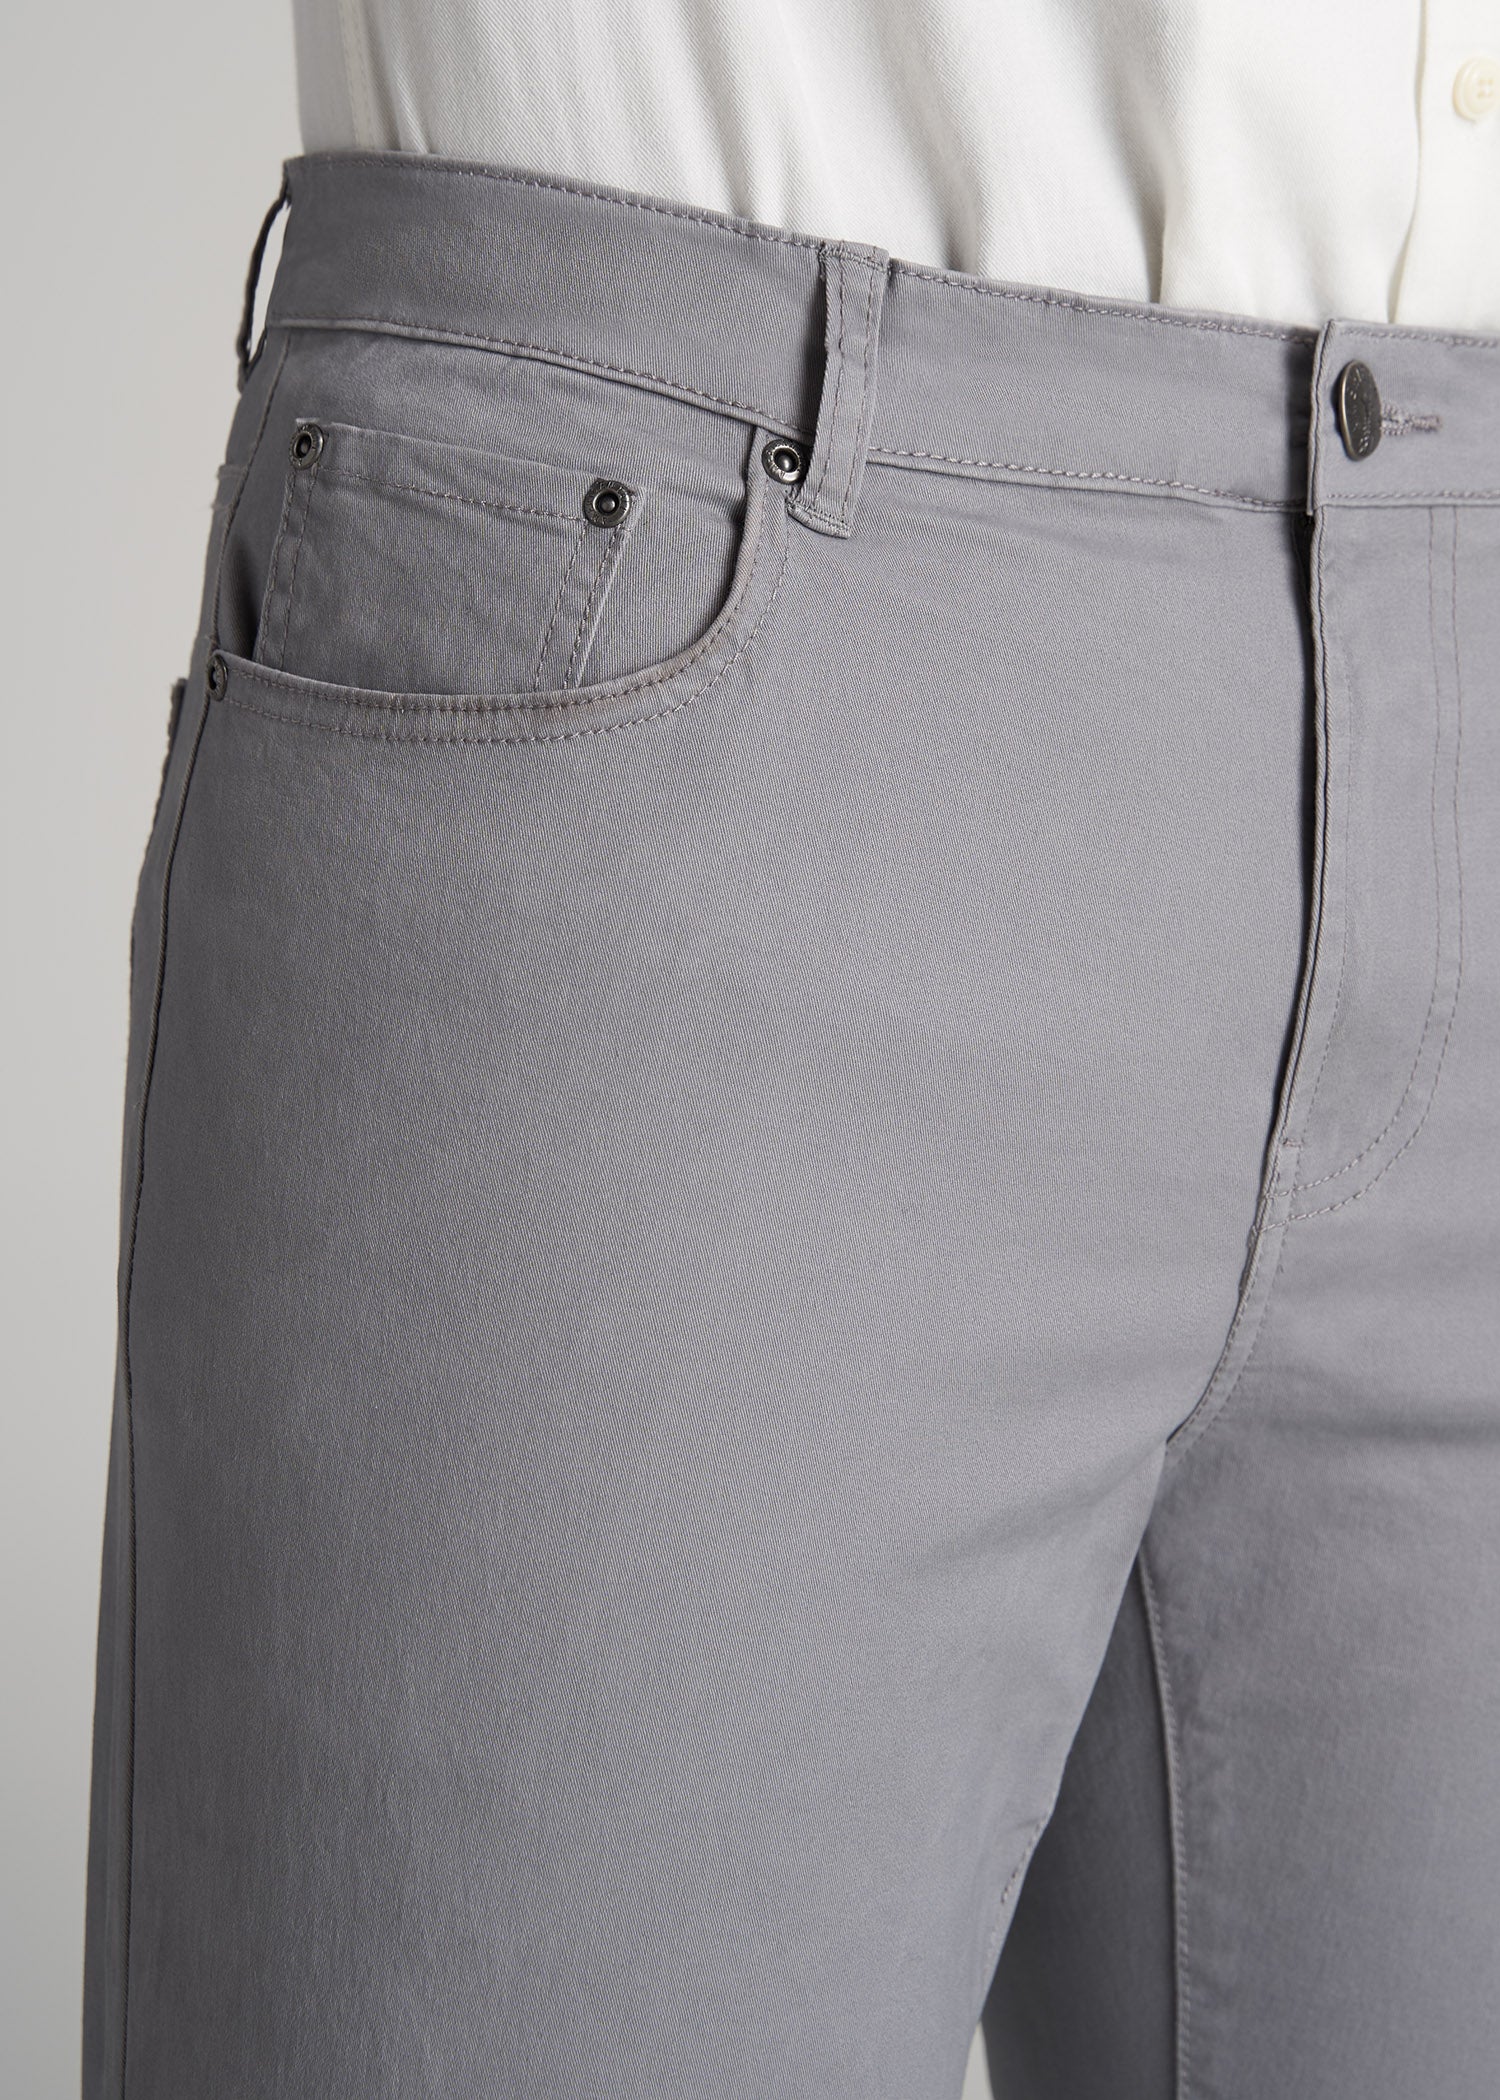 Men's Tall Dylan Slim Fit Five-Pocket Pants Fatigue Green